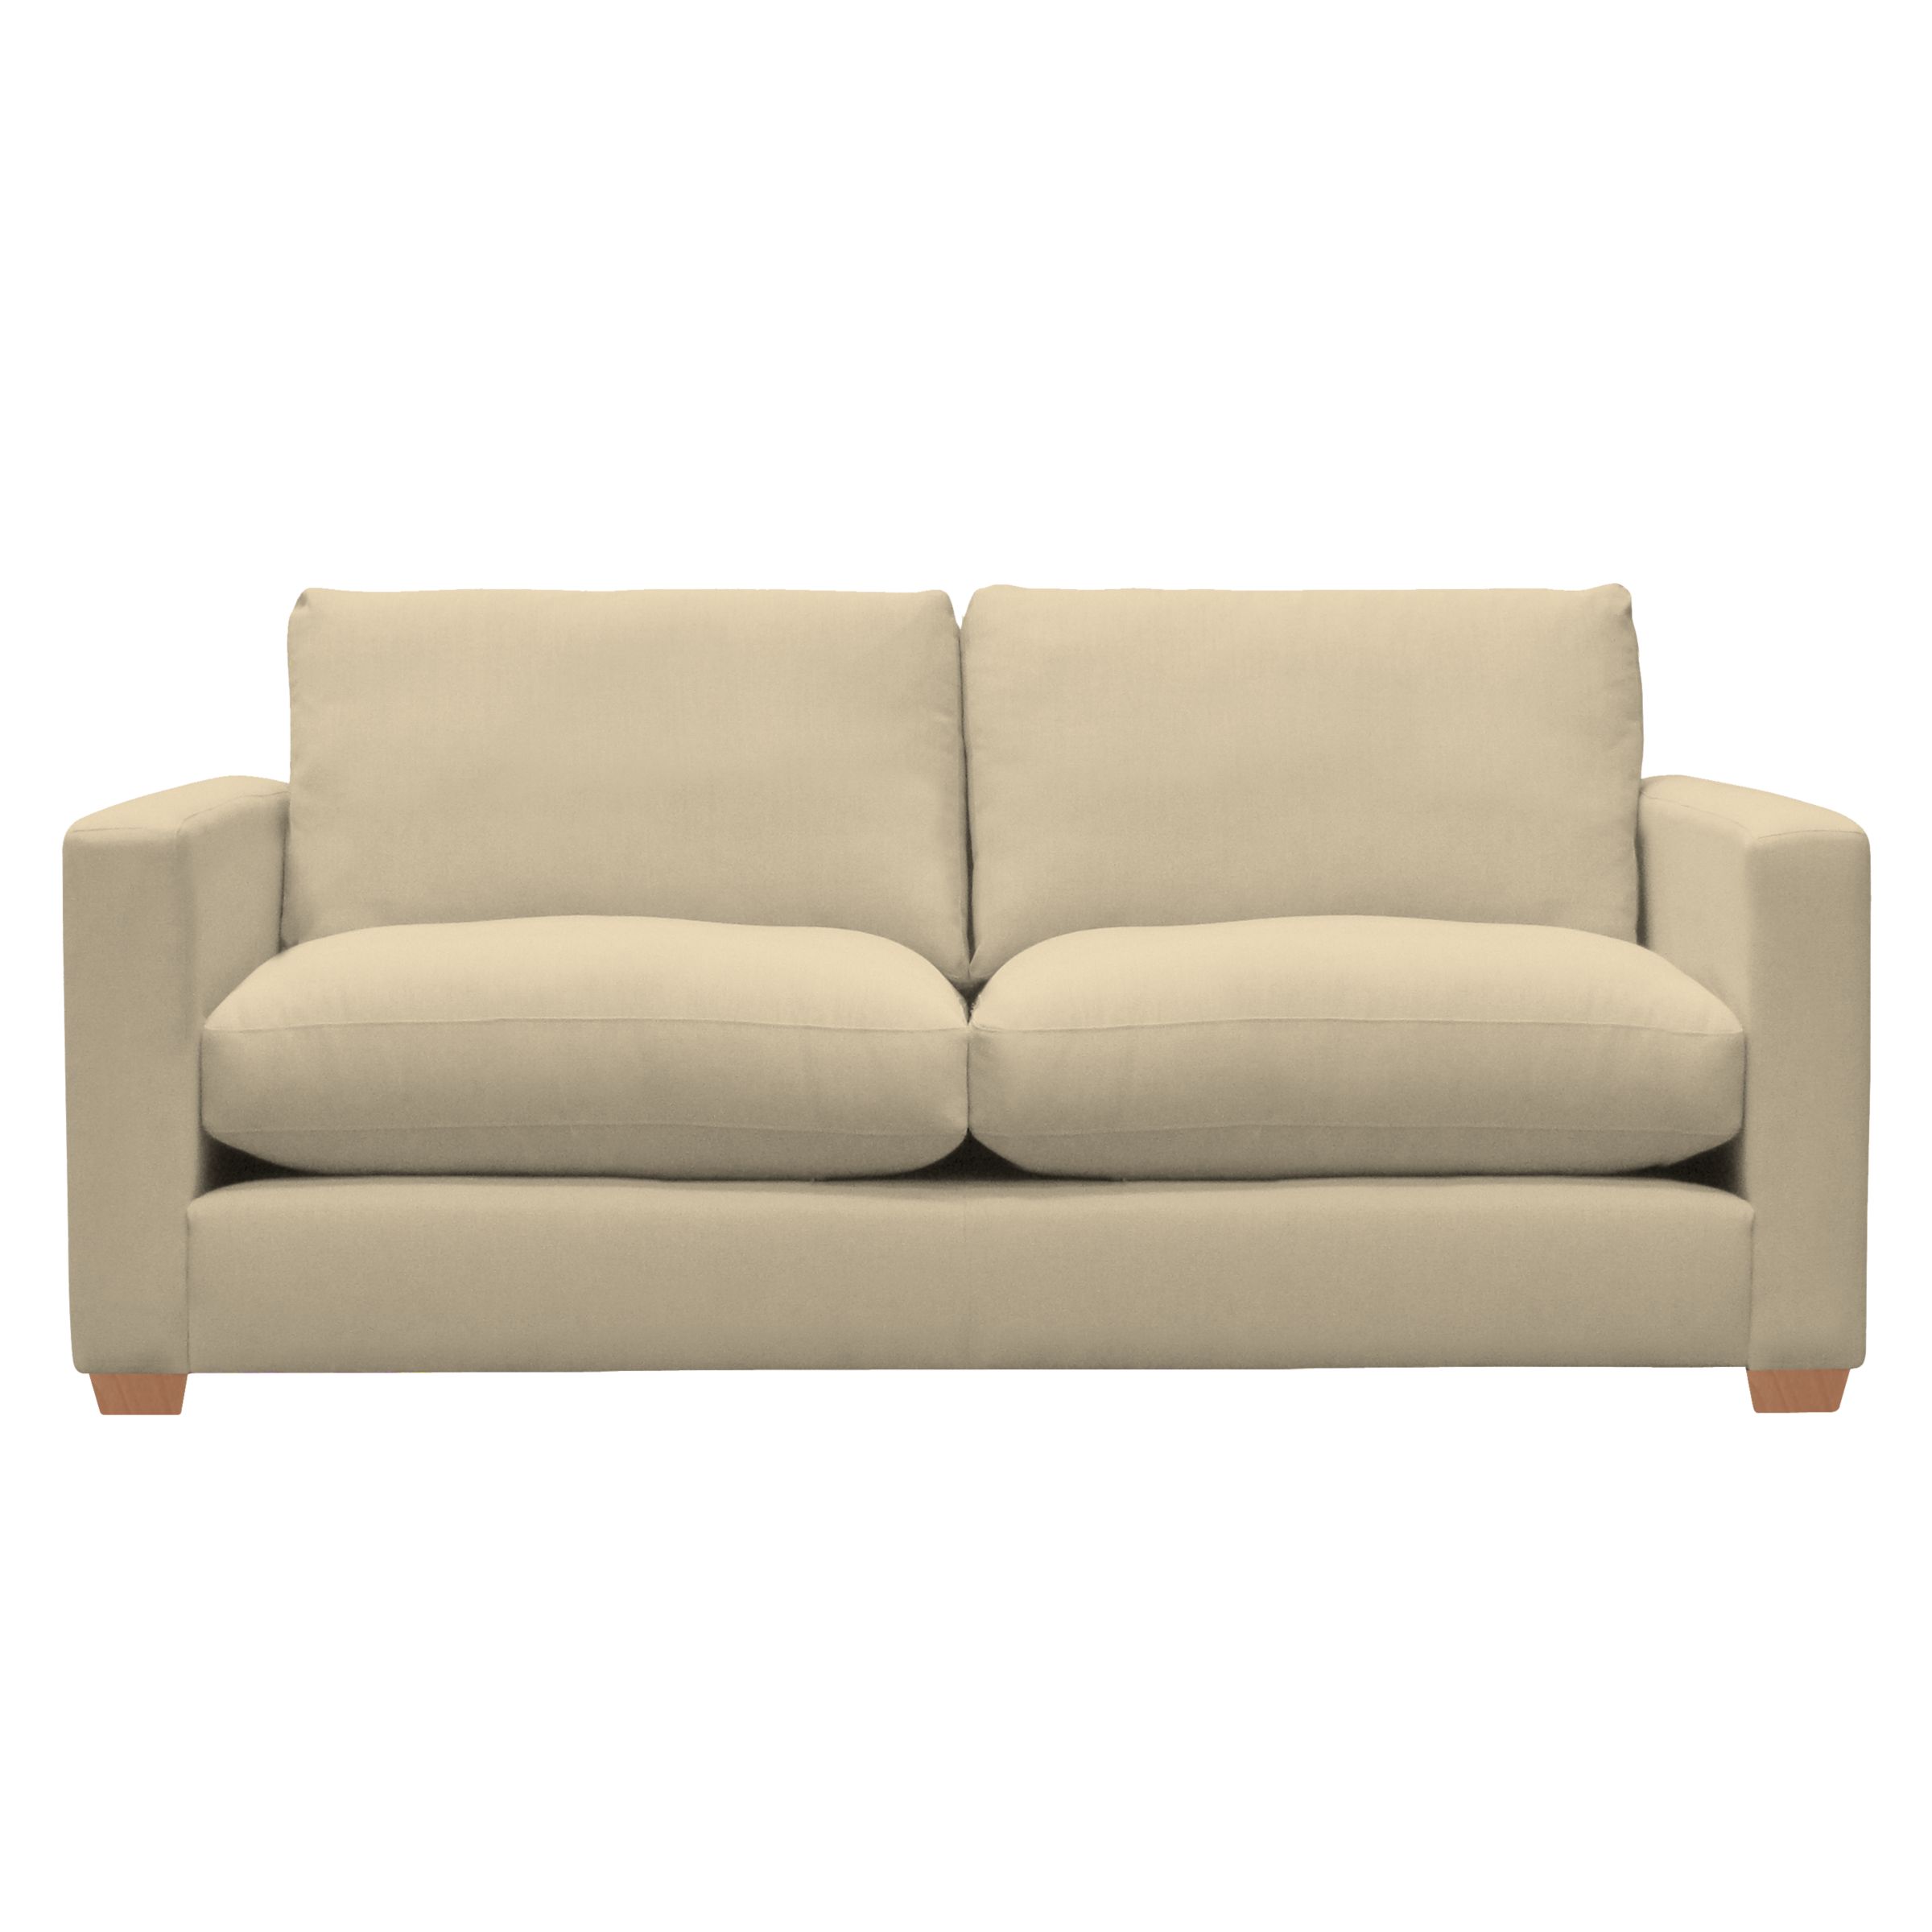 John Lewis Options Slim Arm Large Sofa, Eaton Taupe, width 200cm